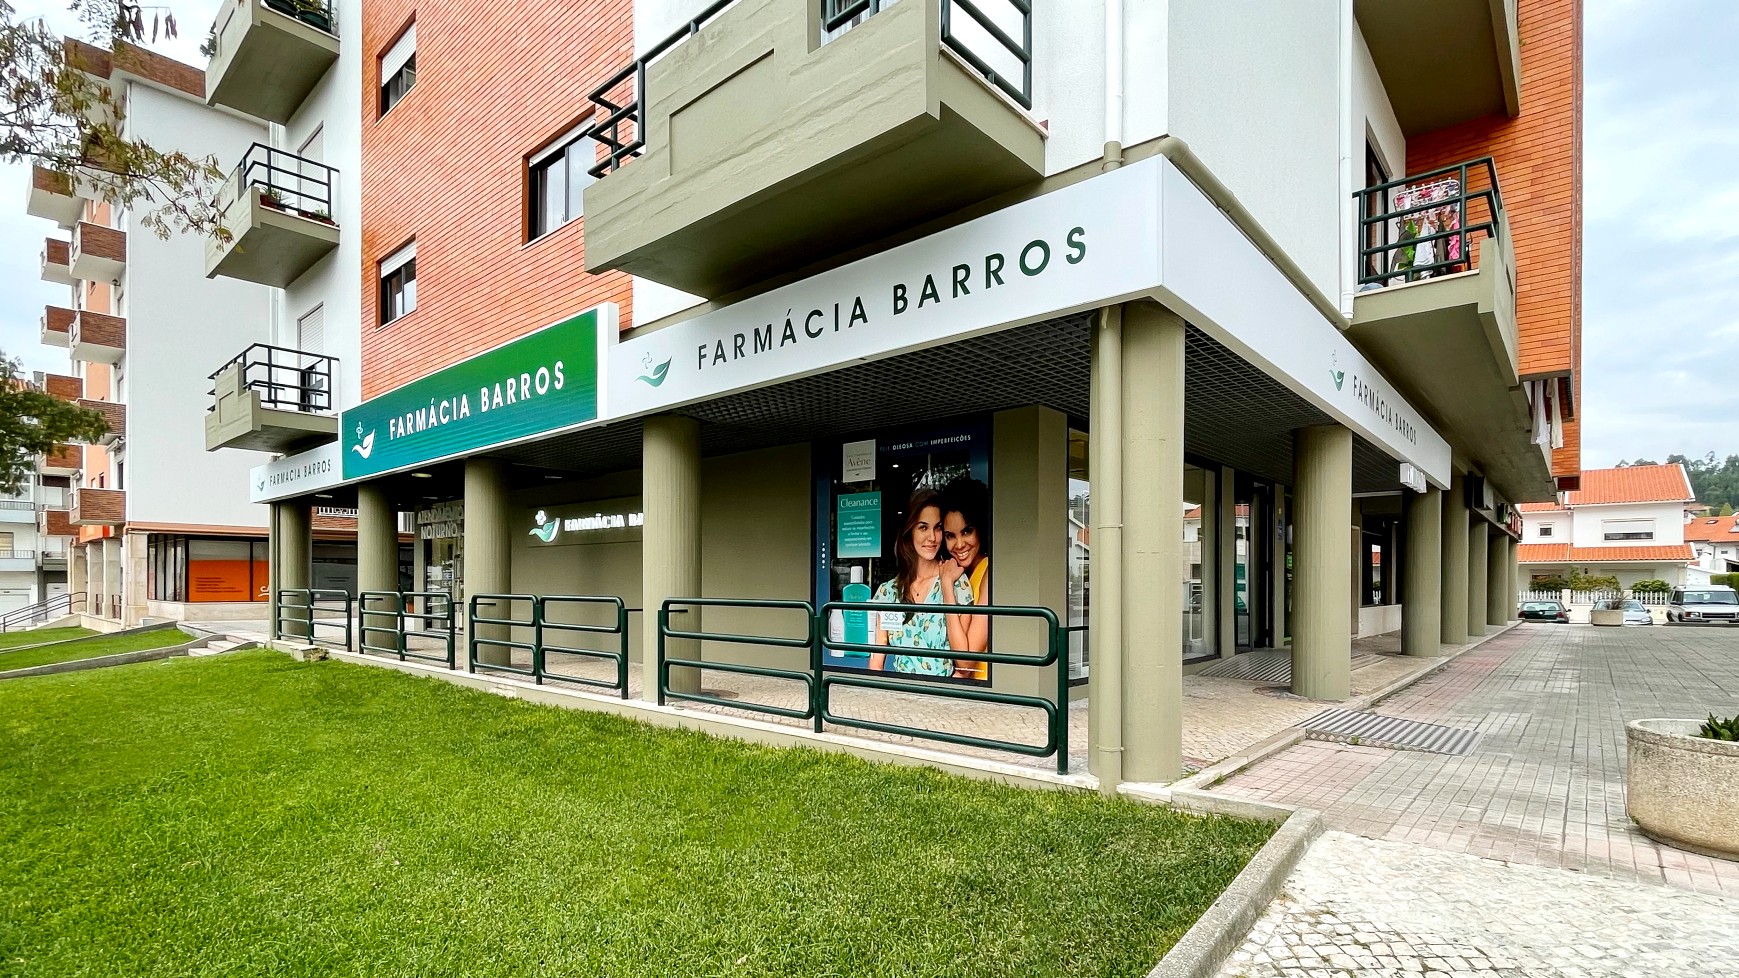 La Pharmacie Barros_Medd Agencement_Projet de renovation_2021_1_9